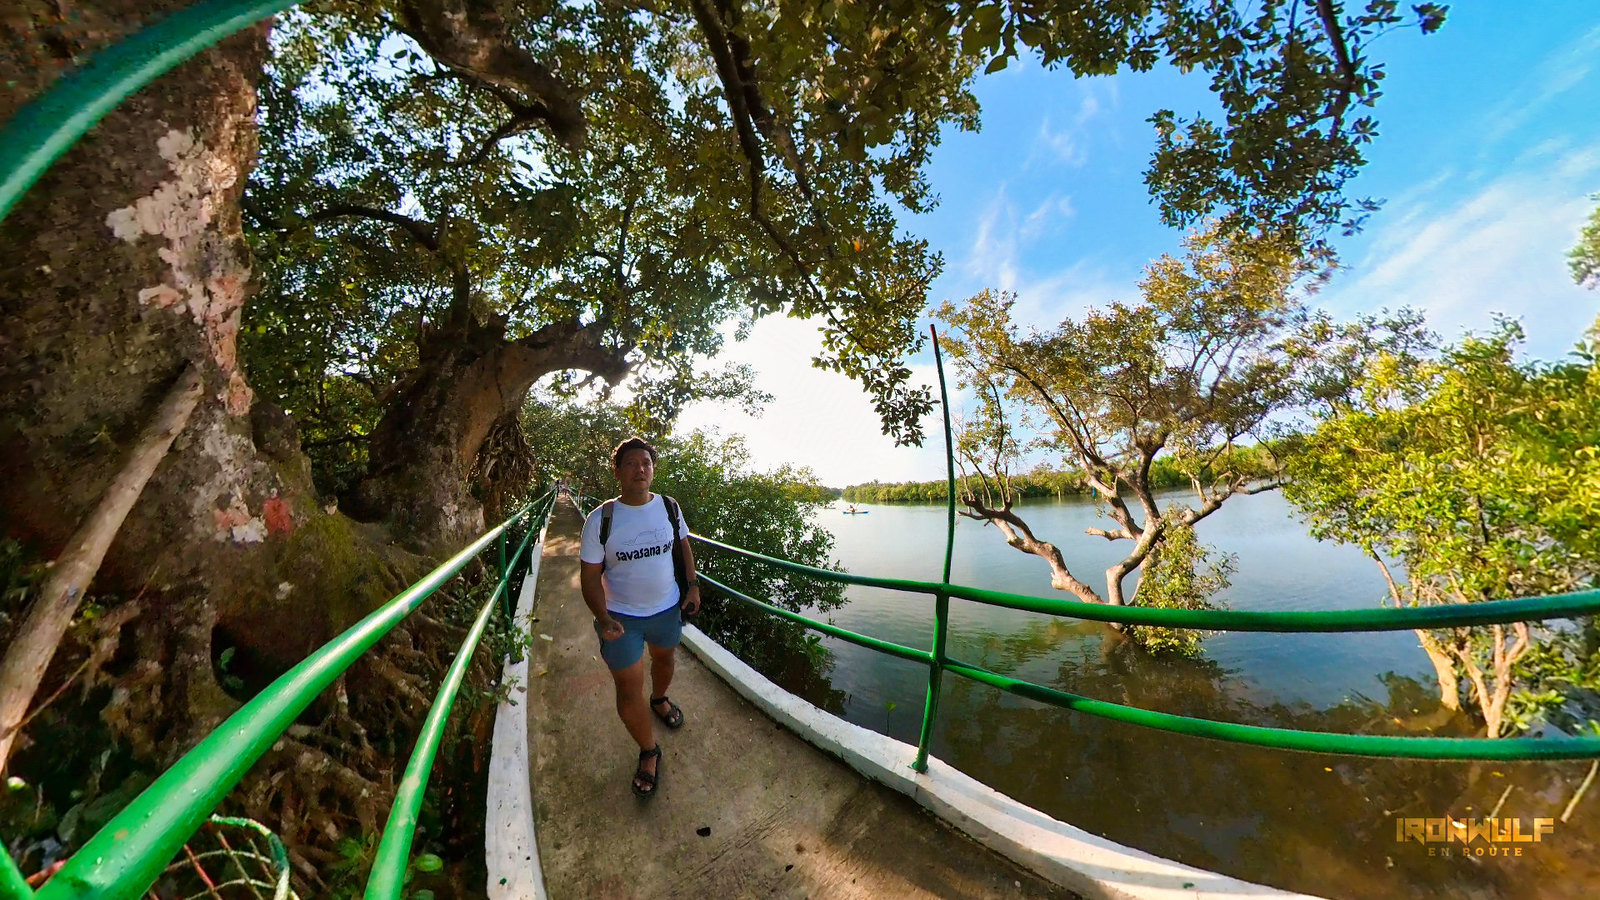 San Nicolas Mangrove Forest mangrove boardwalk